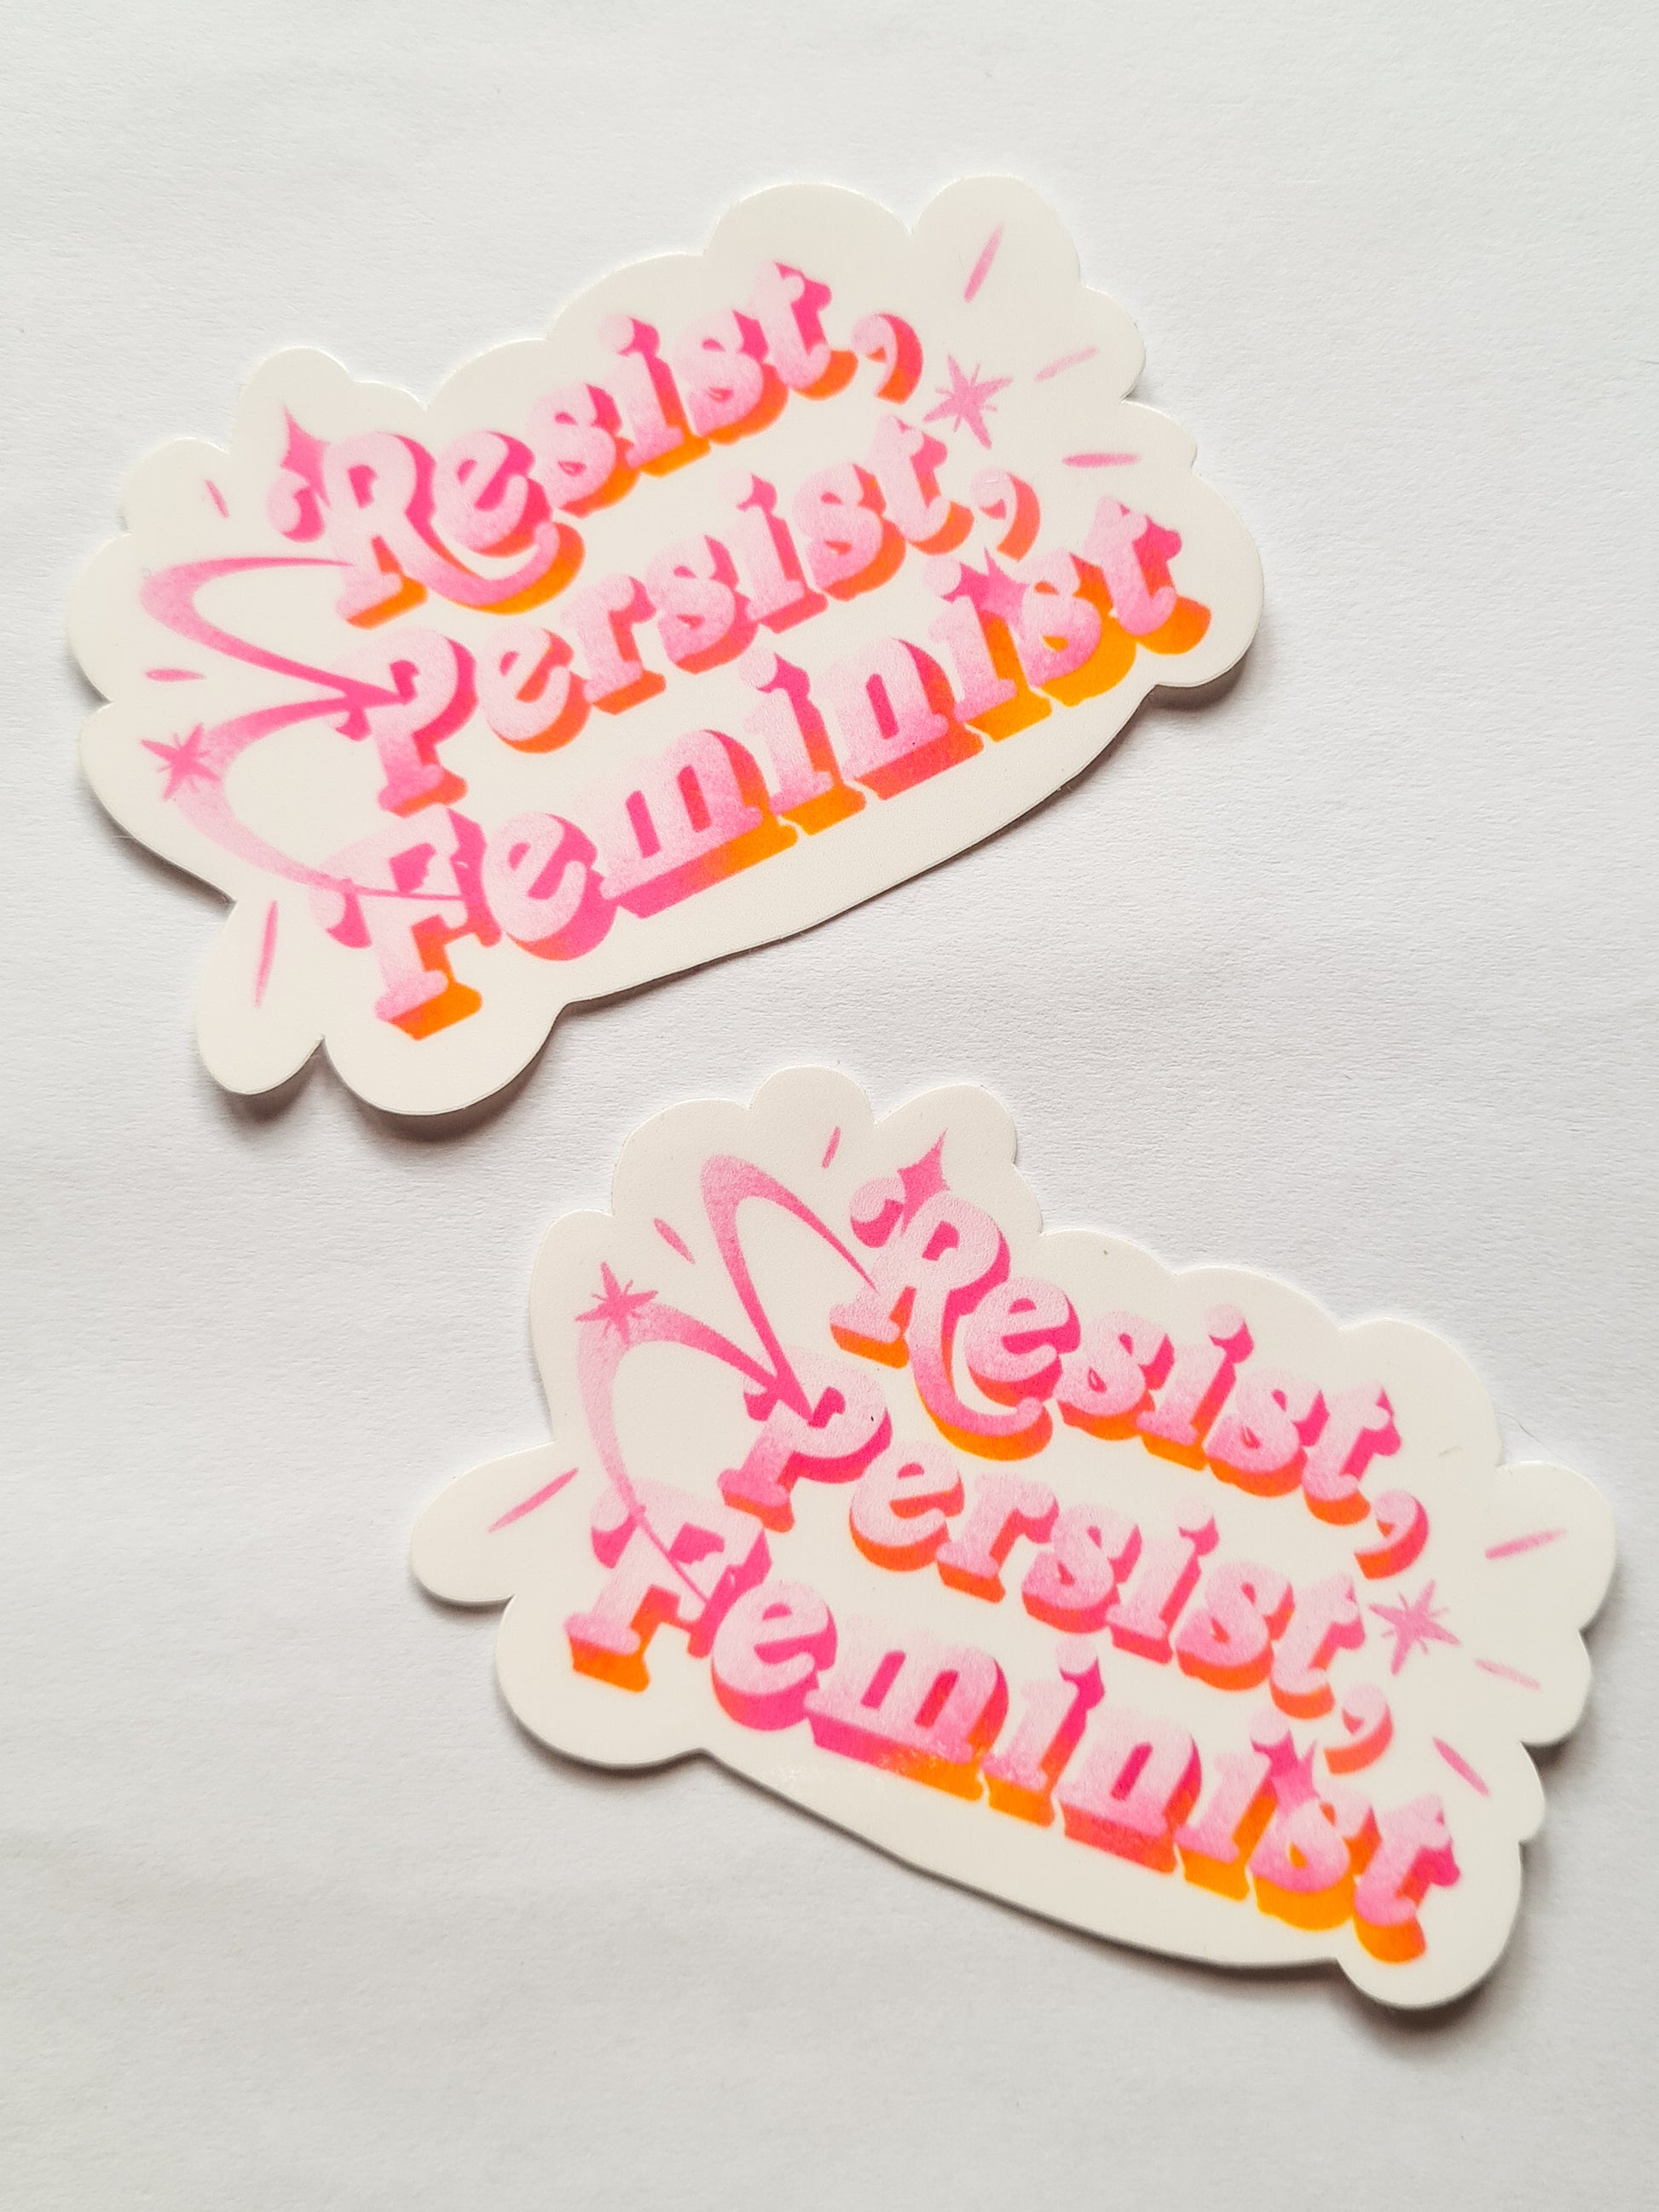 RESIST PERSIST, FEMINIST type sticker - Woman Create